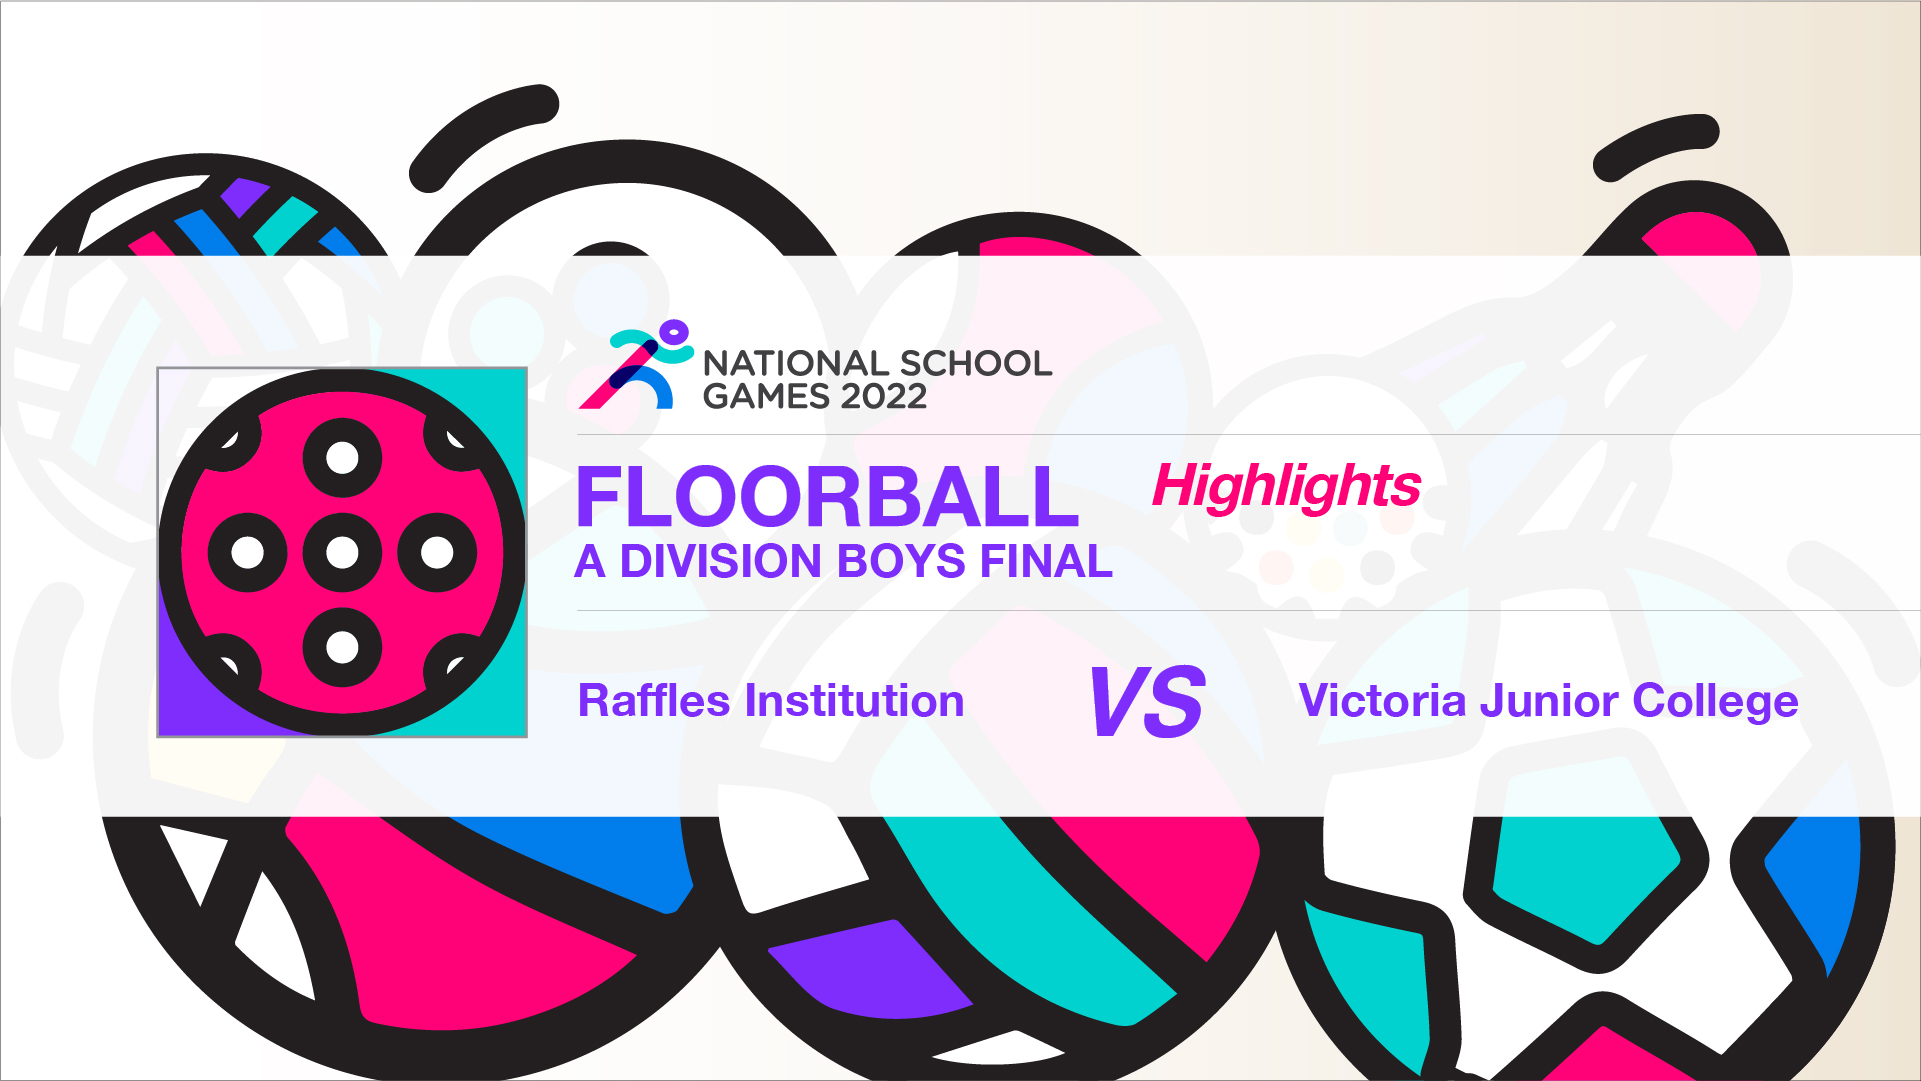 SSSC Floorball A Division Boys Final| Raffles Institution vs Victoria Junior College - Highlights